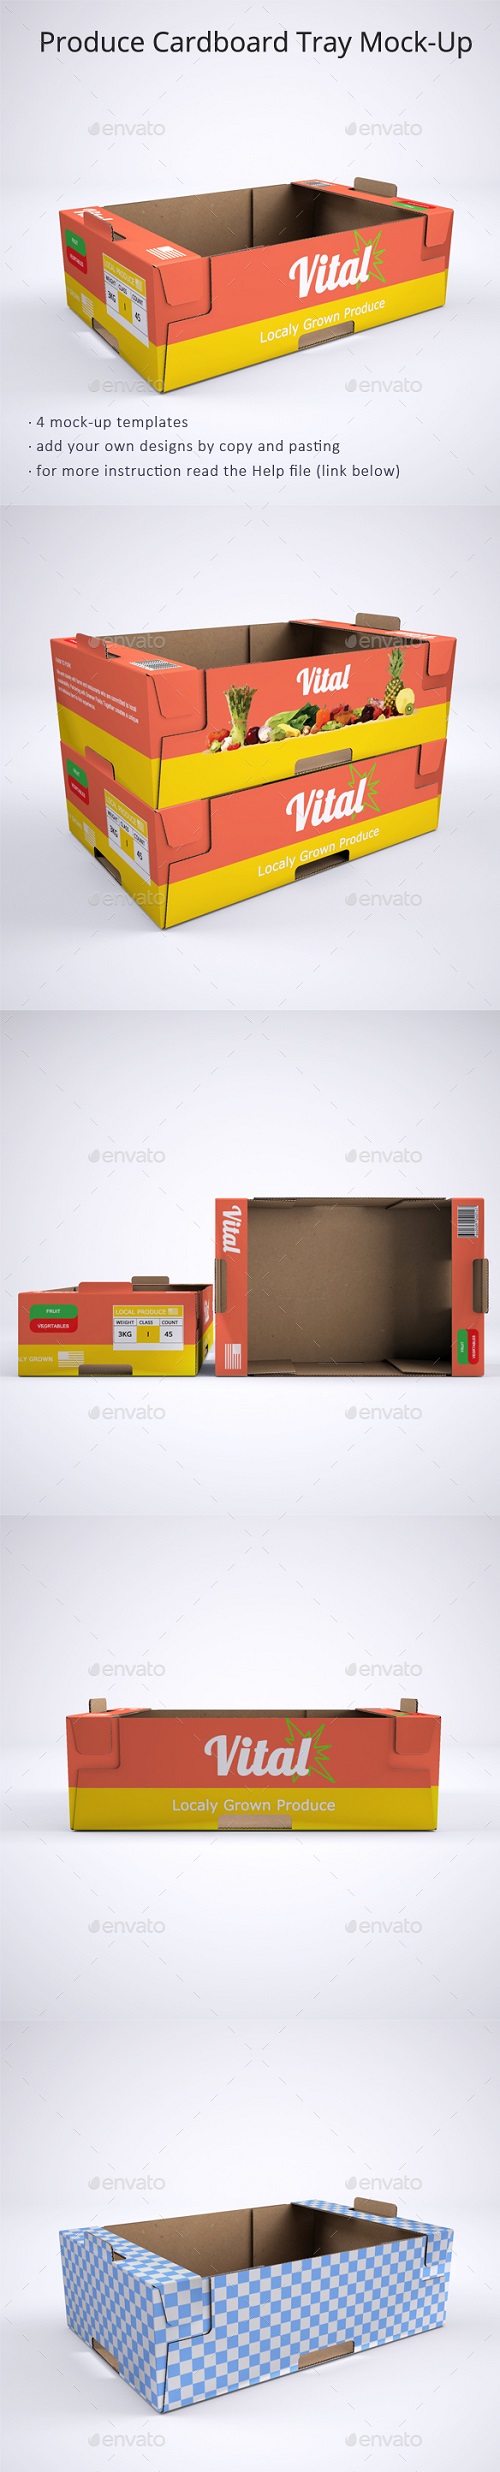 Produce Cardboard Tray or Box Mock-Up 21246954